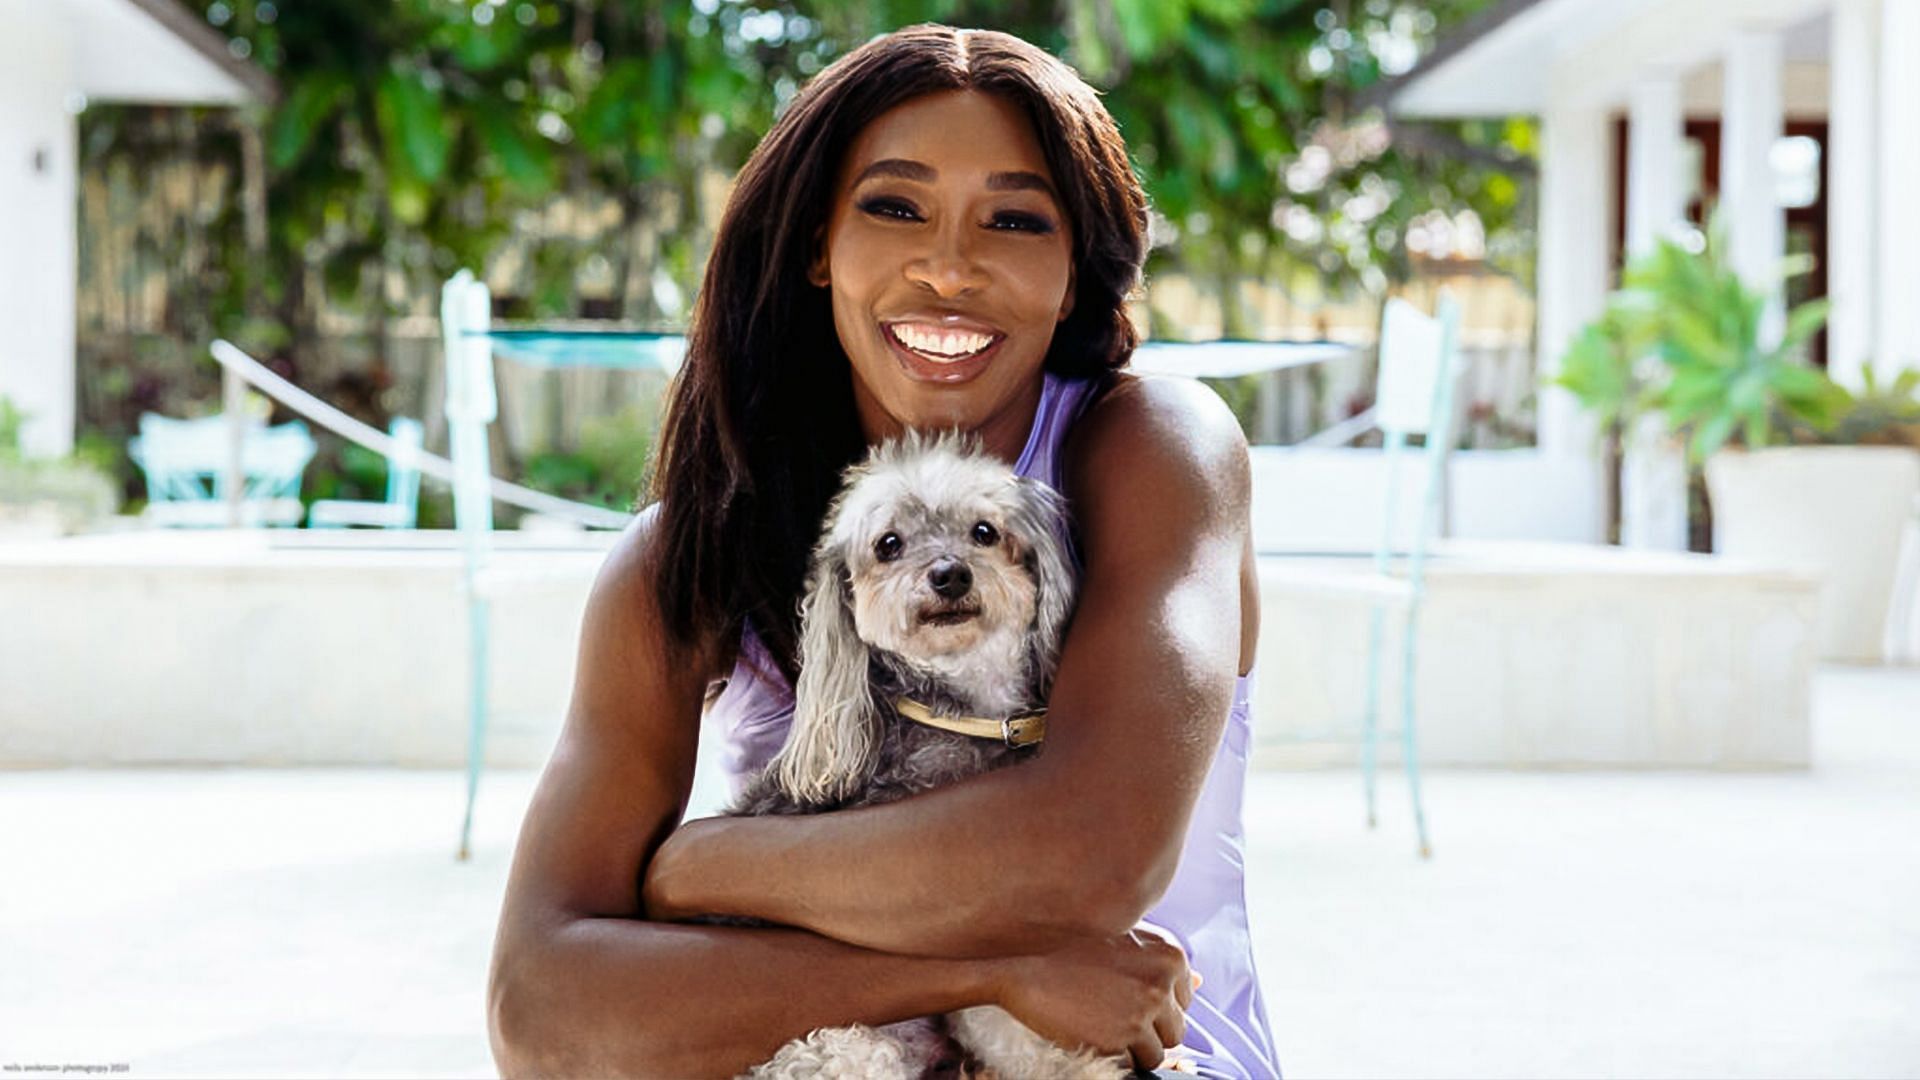 Venus Williams poses with her pet dog